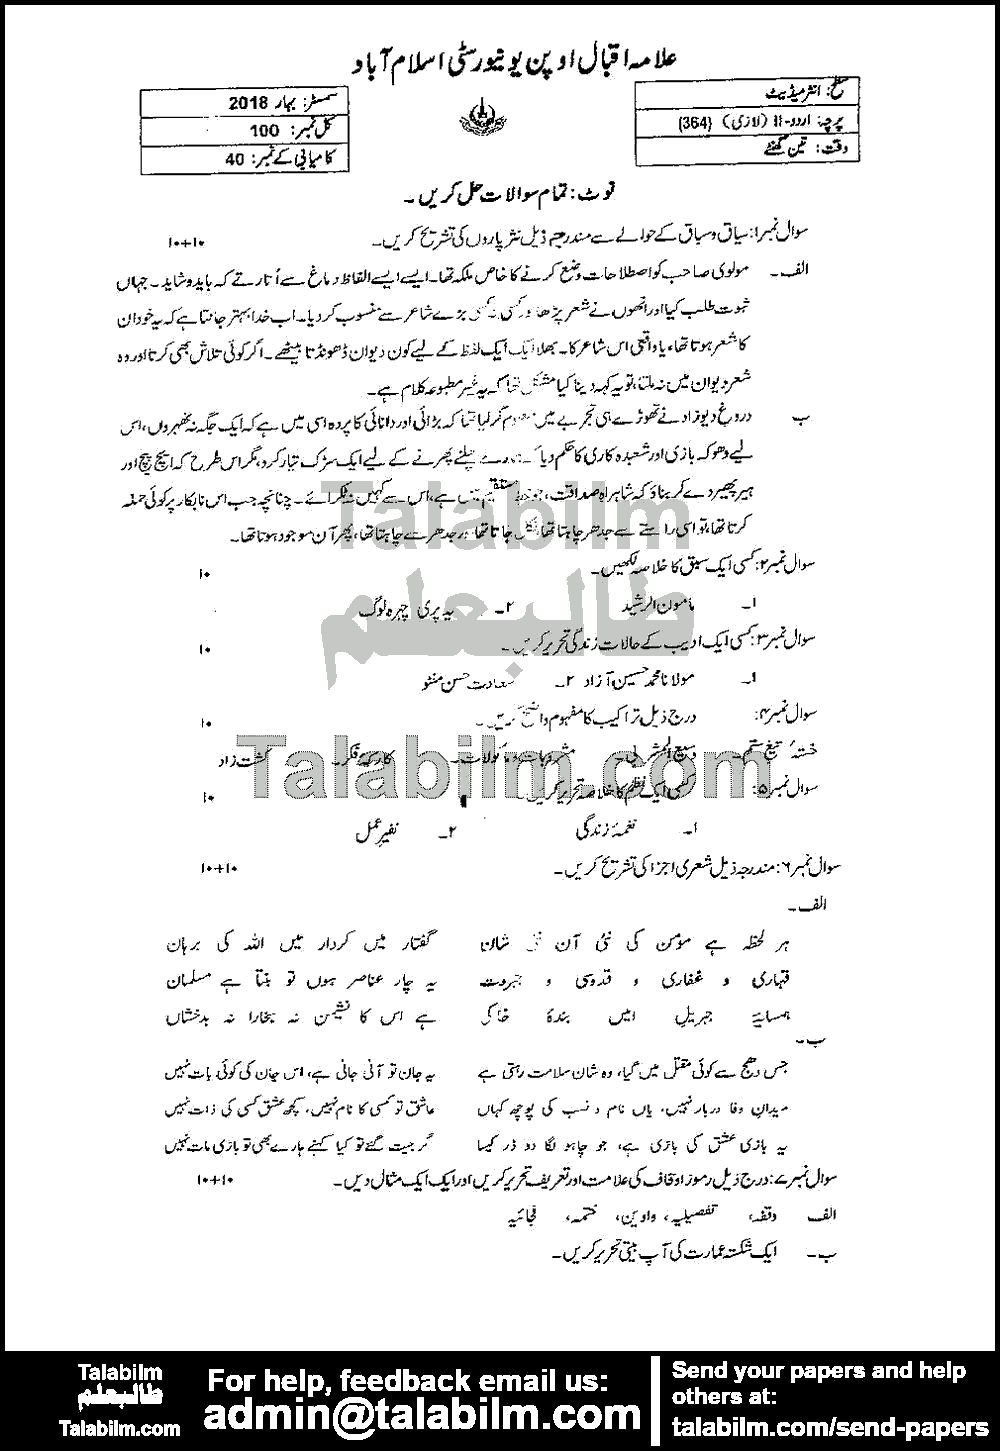 Urdu-II 364 past paper for Spring 2018